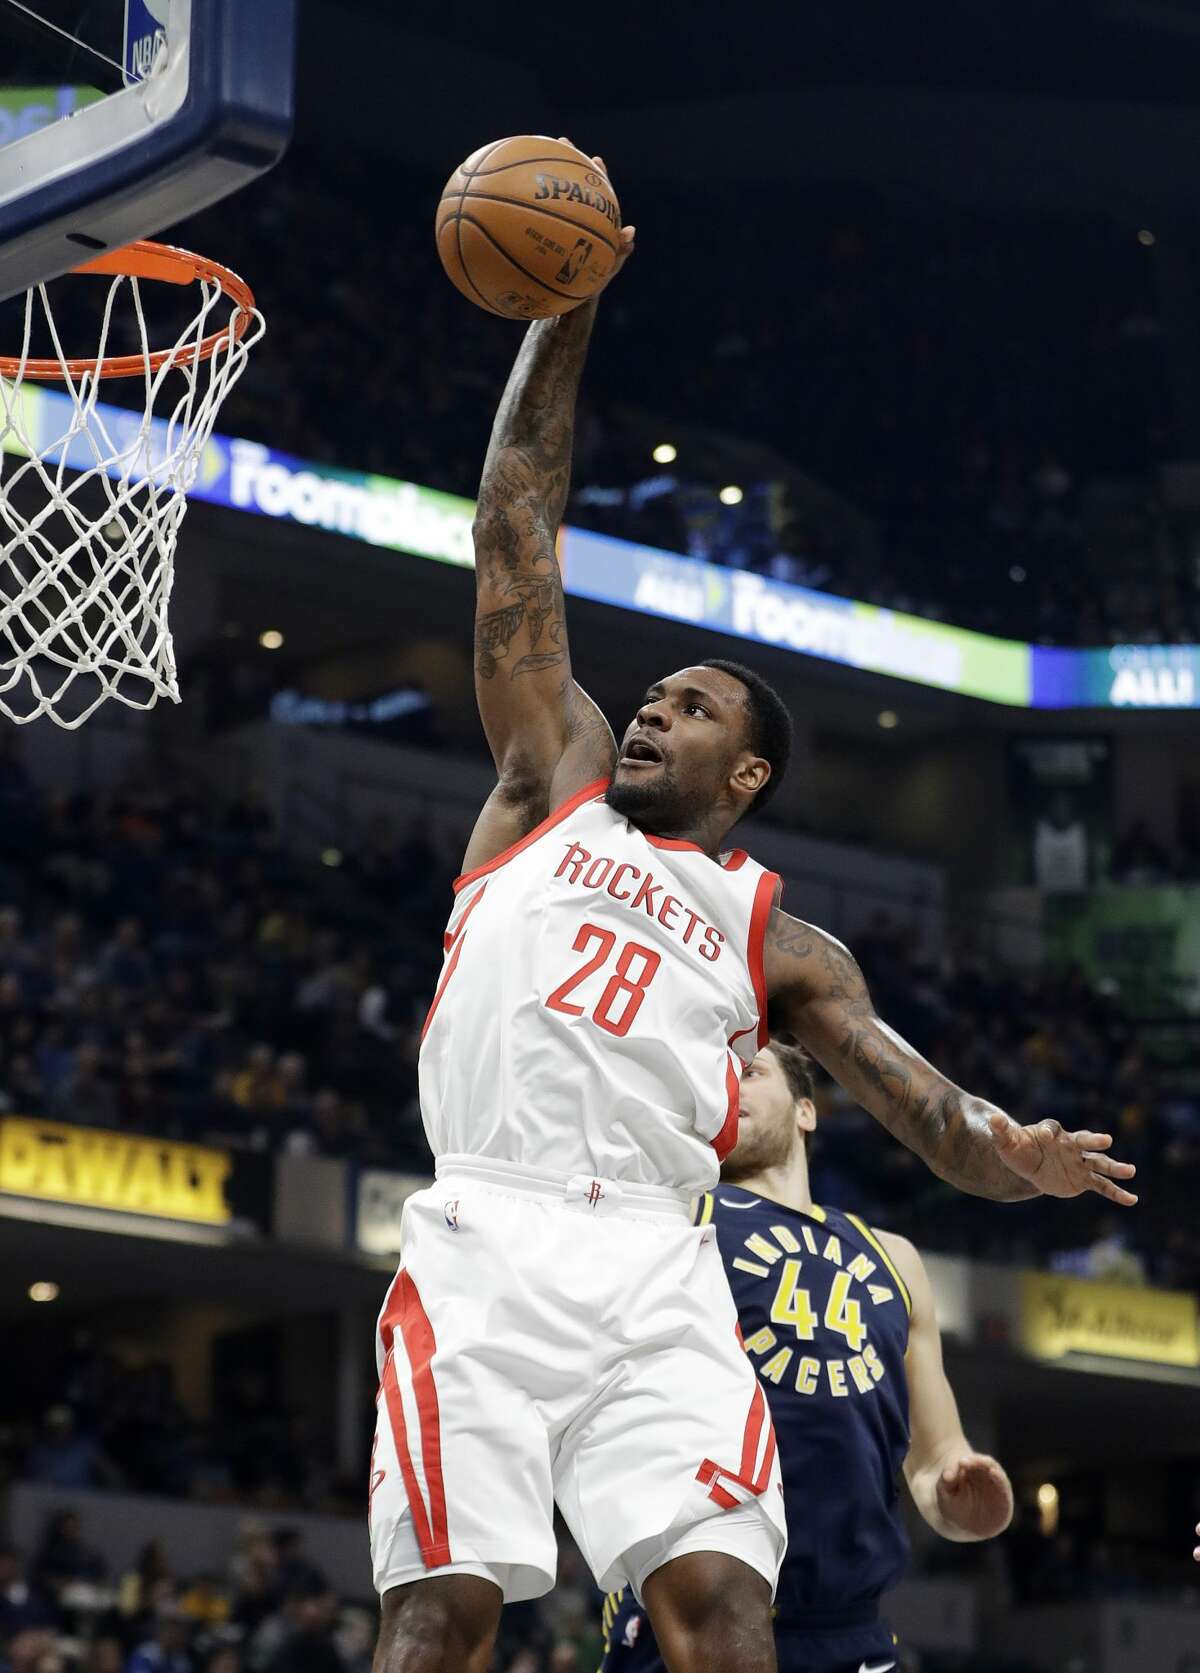 Houston Rockets' Tarik Black (28) dunks against Indiana Pacers' Bojan Bogdanovic (44) during the first half of an NBA basketball game, Sunday, Nov. 12, 2017, in Indianapolis. (AP Photo/Darron Cummings)